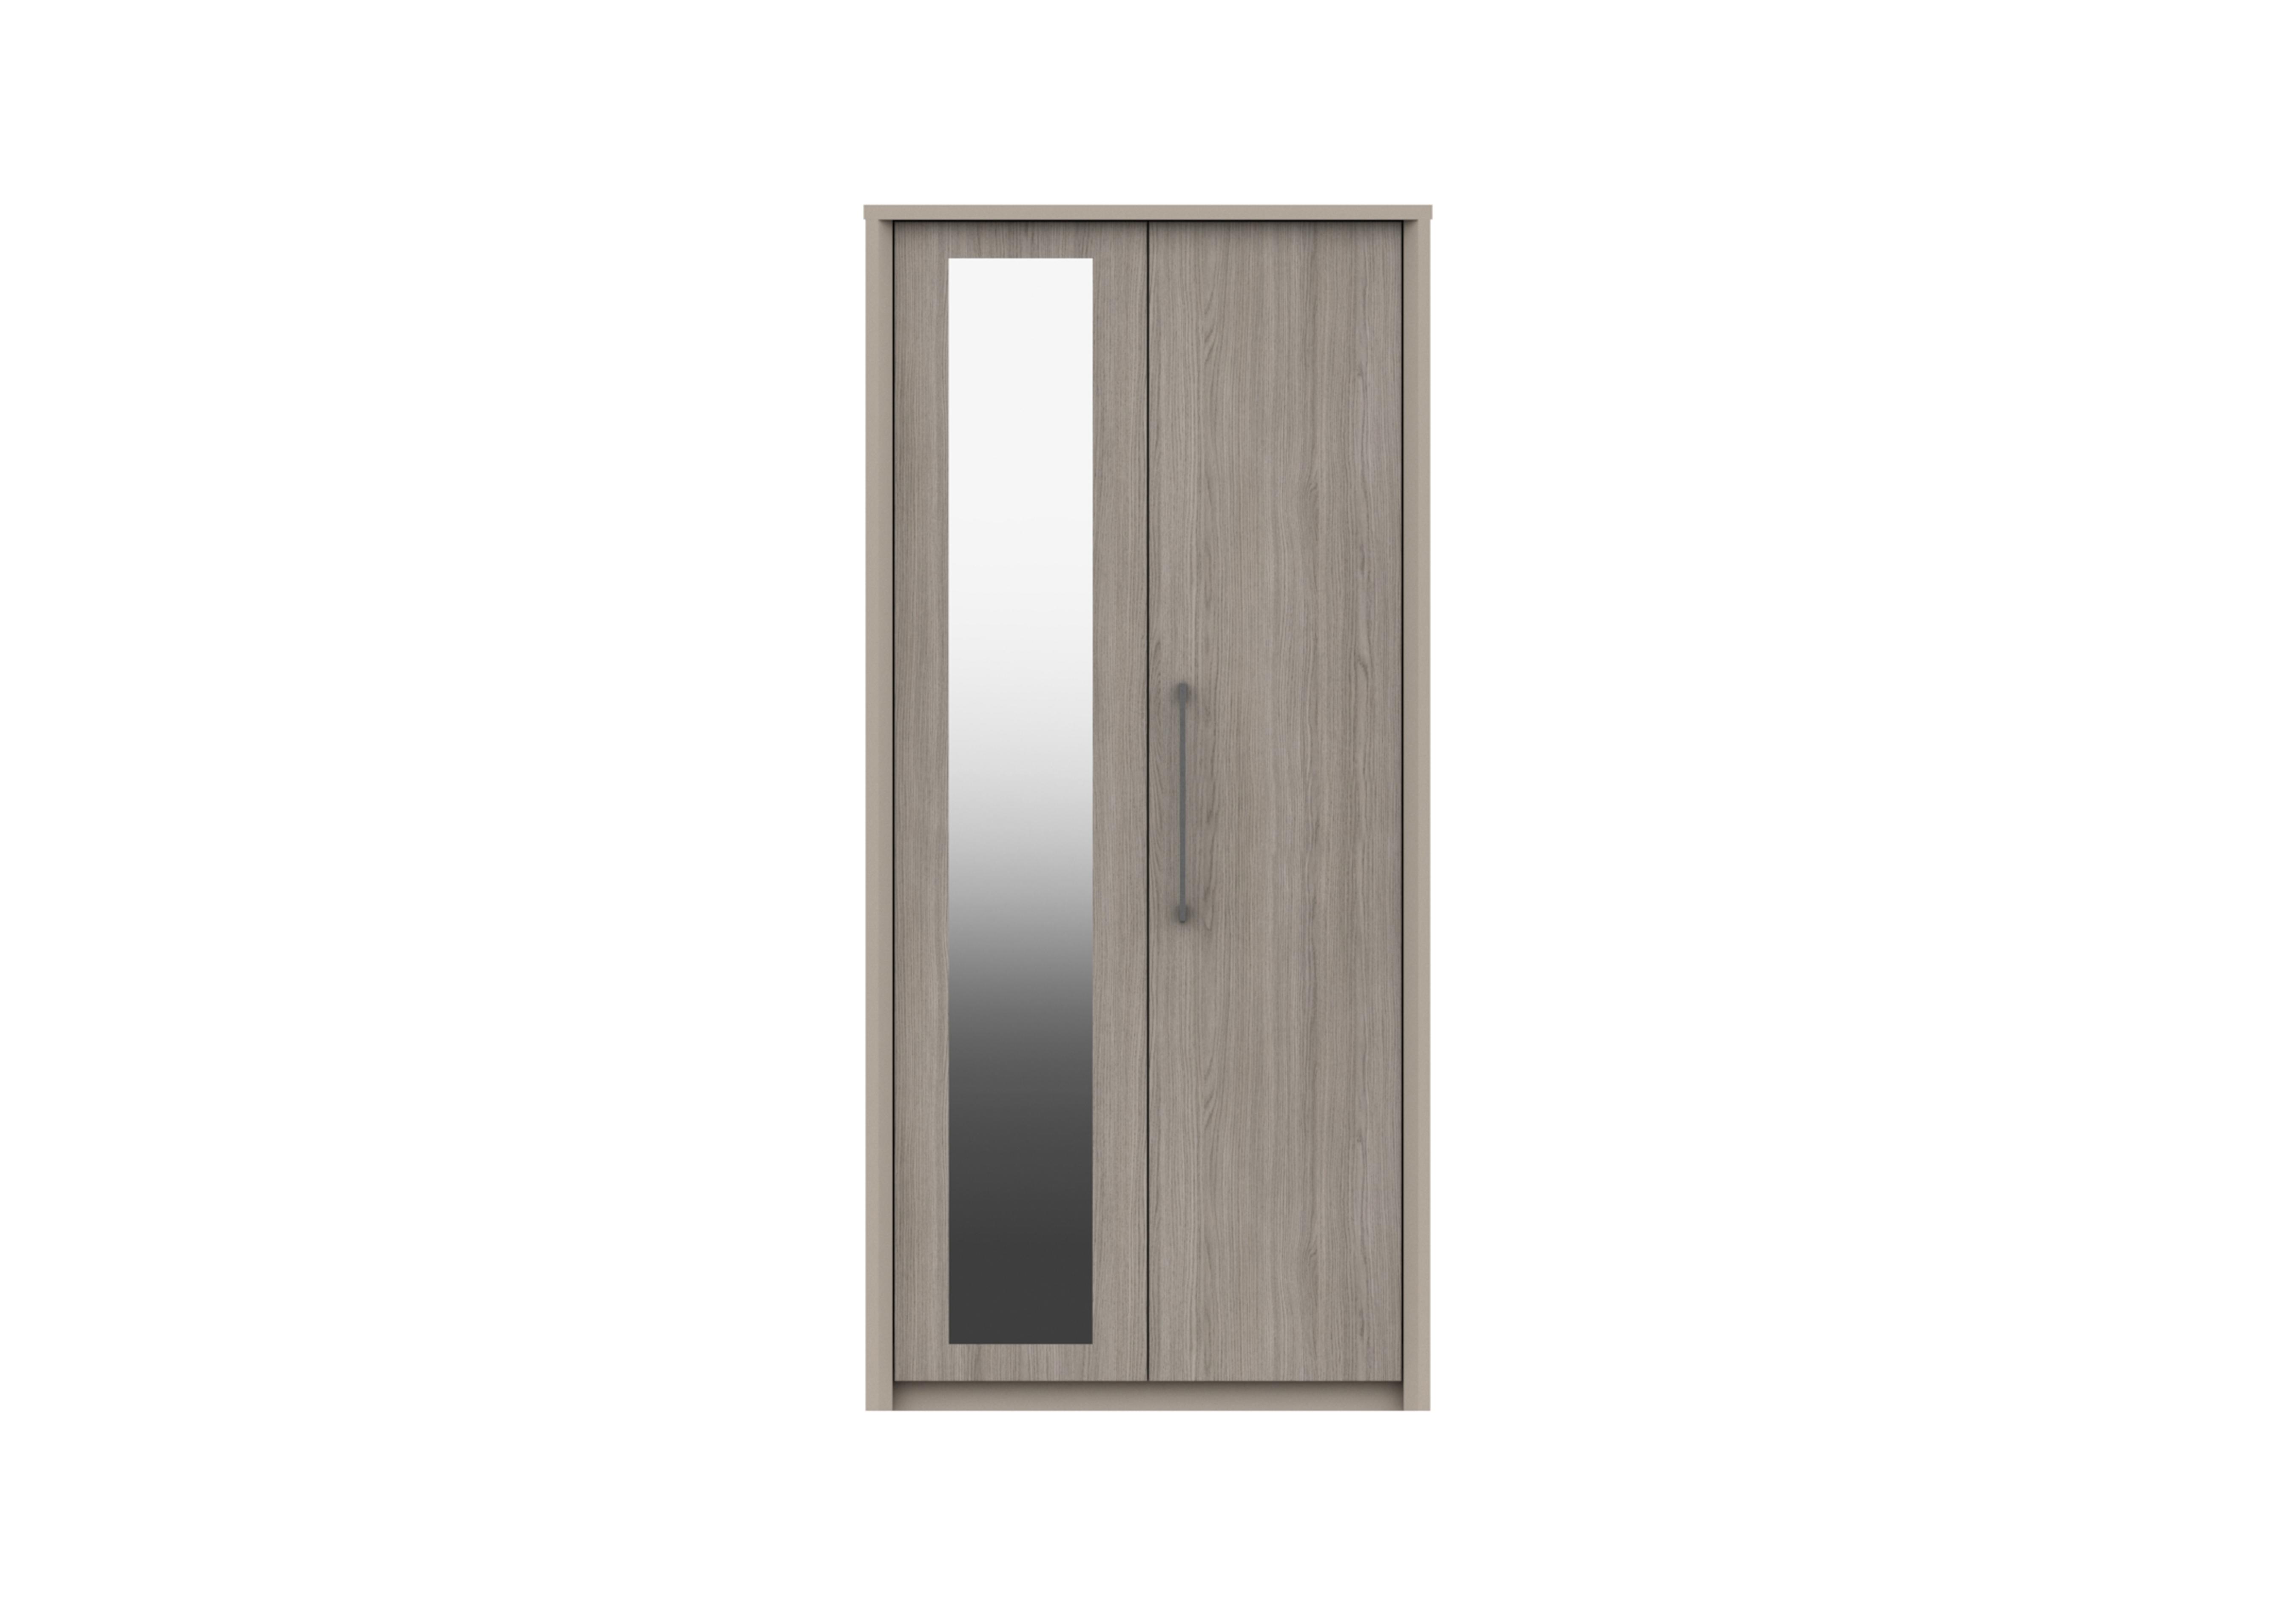 Paddington 2 Door Wardrobe with Mirror in Fired Earth/Grey Oak on Furniture Village